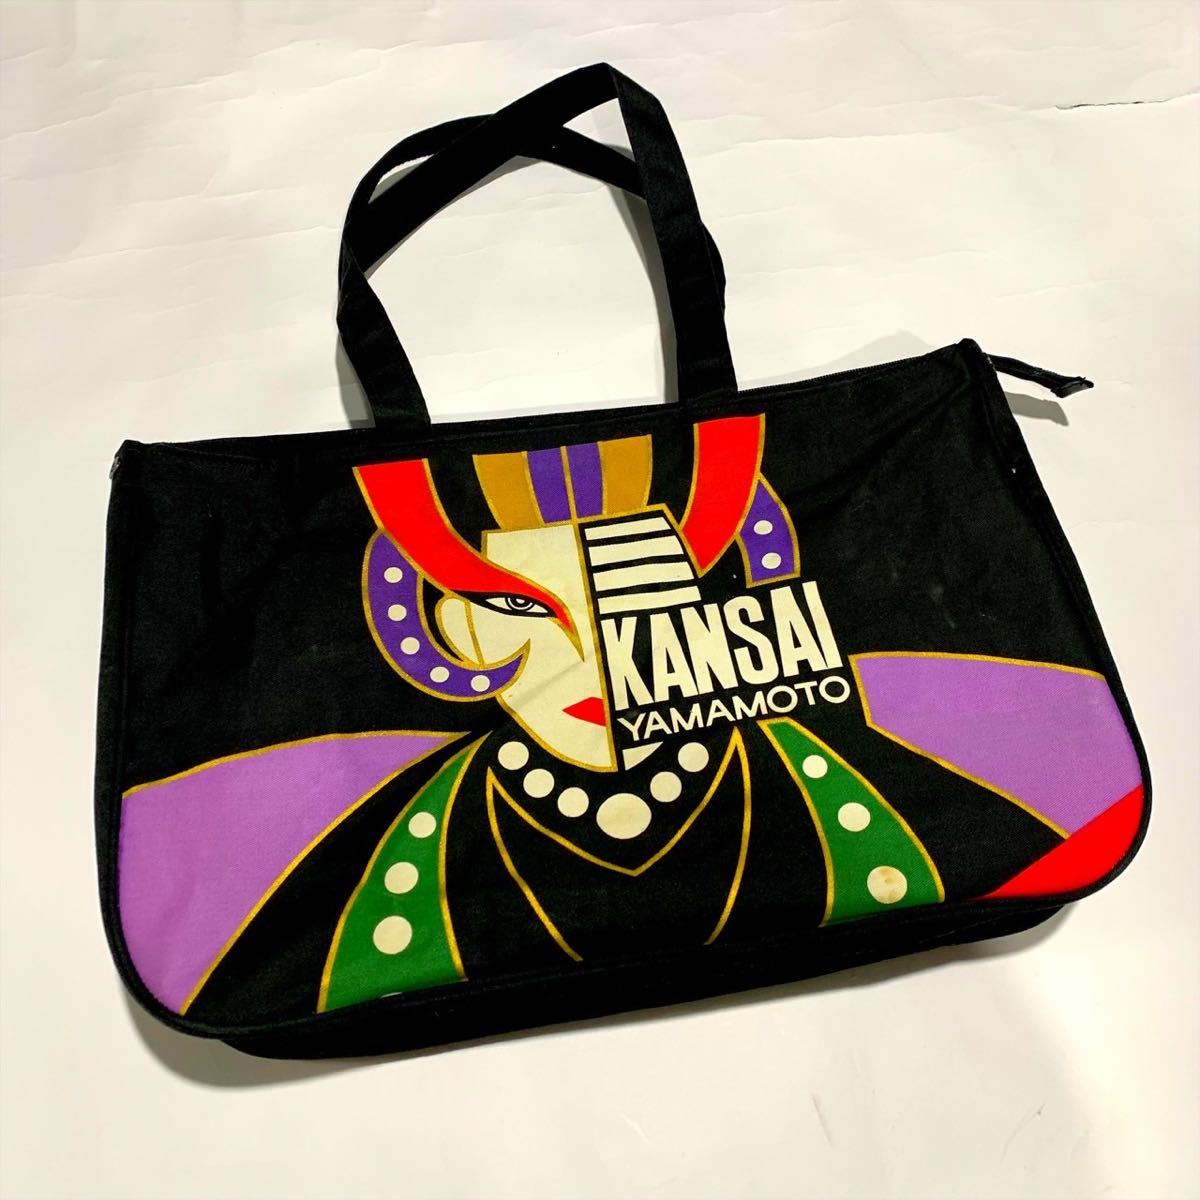 Kansai yamamoto ハンドバッグ bag トートバッグ international